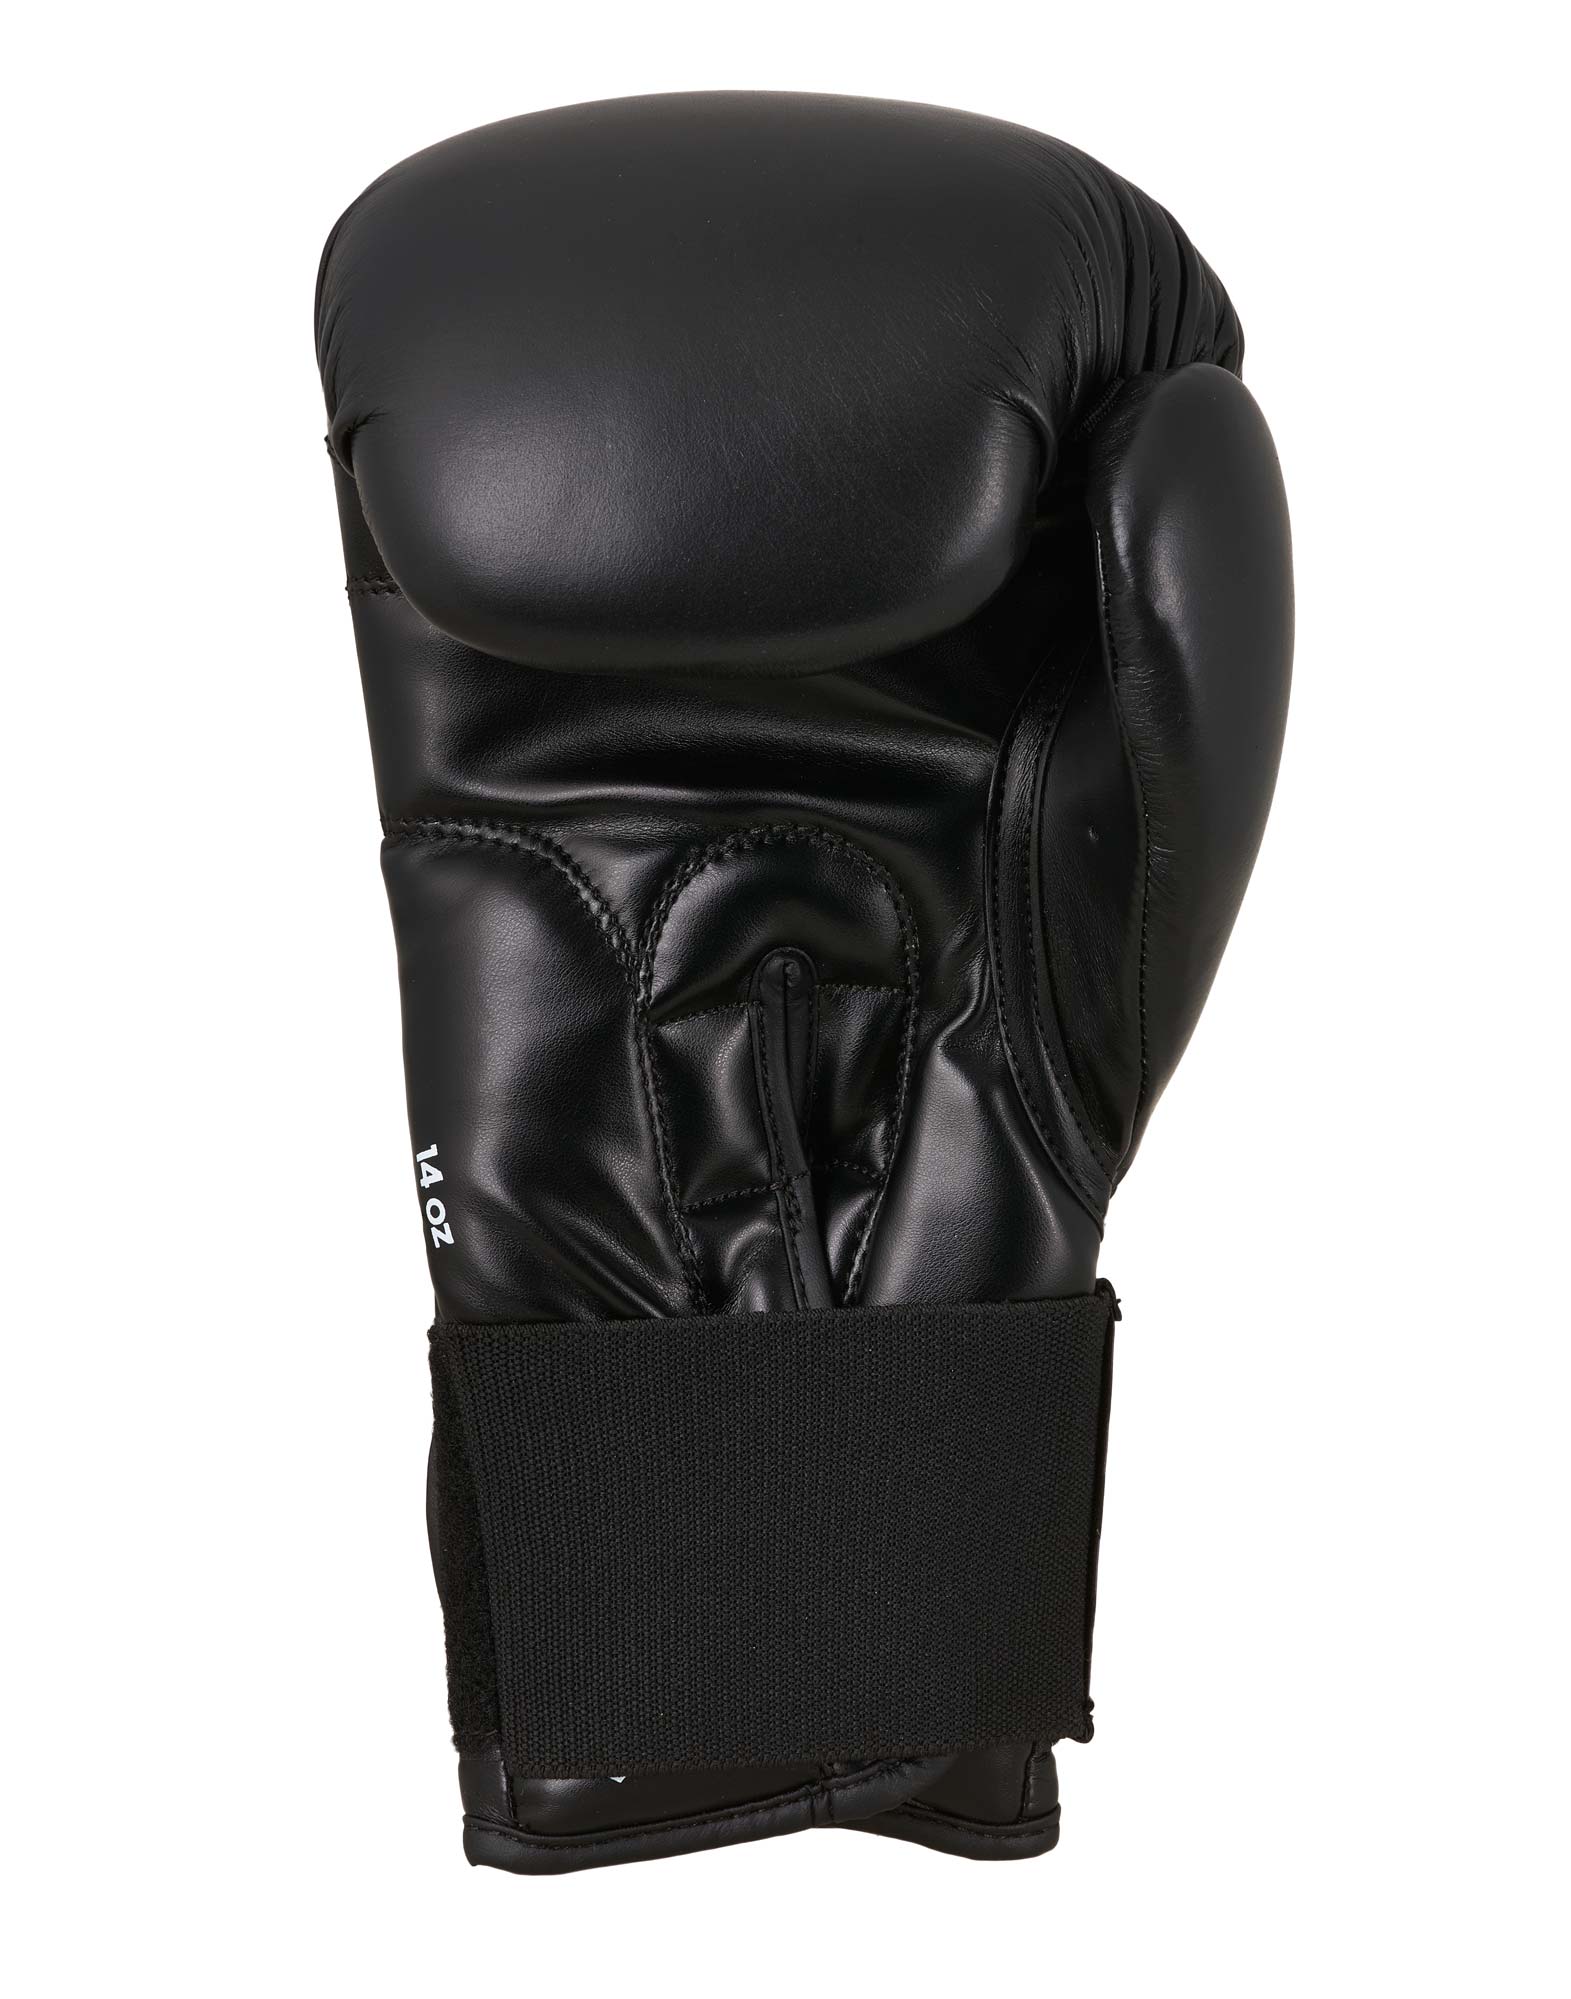 Adidas Boxhandschuhe Performer schwarz ADIBC01 KAMPFHELDEN 